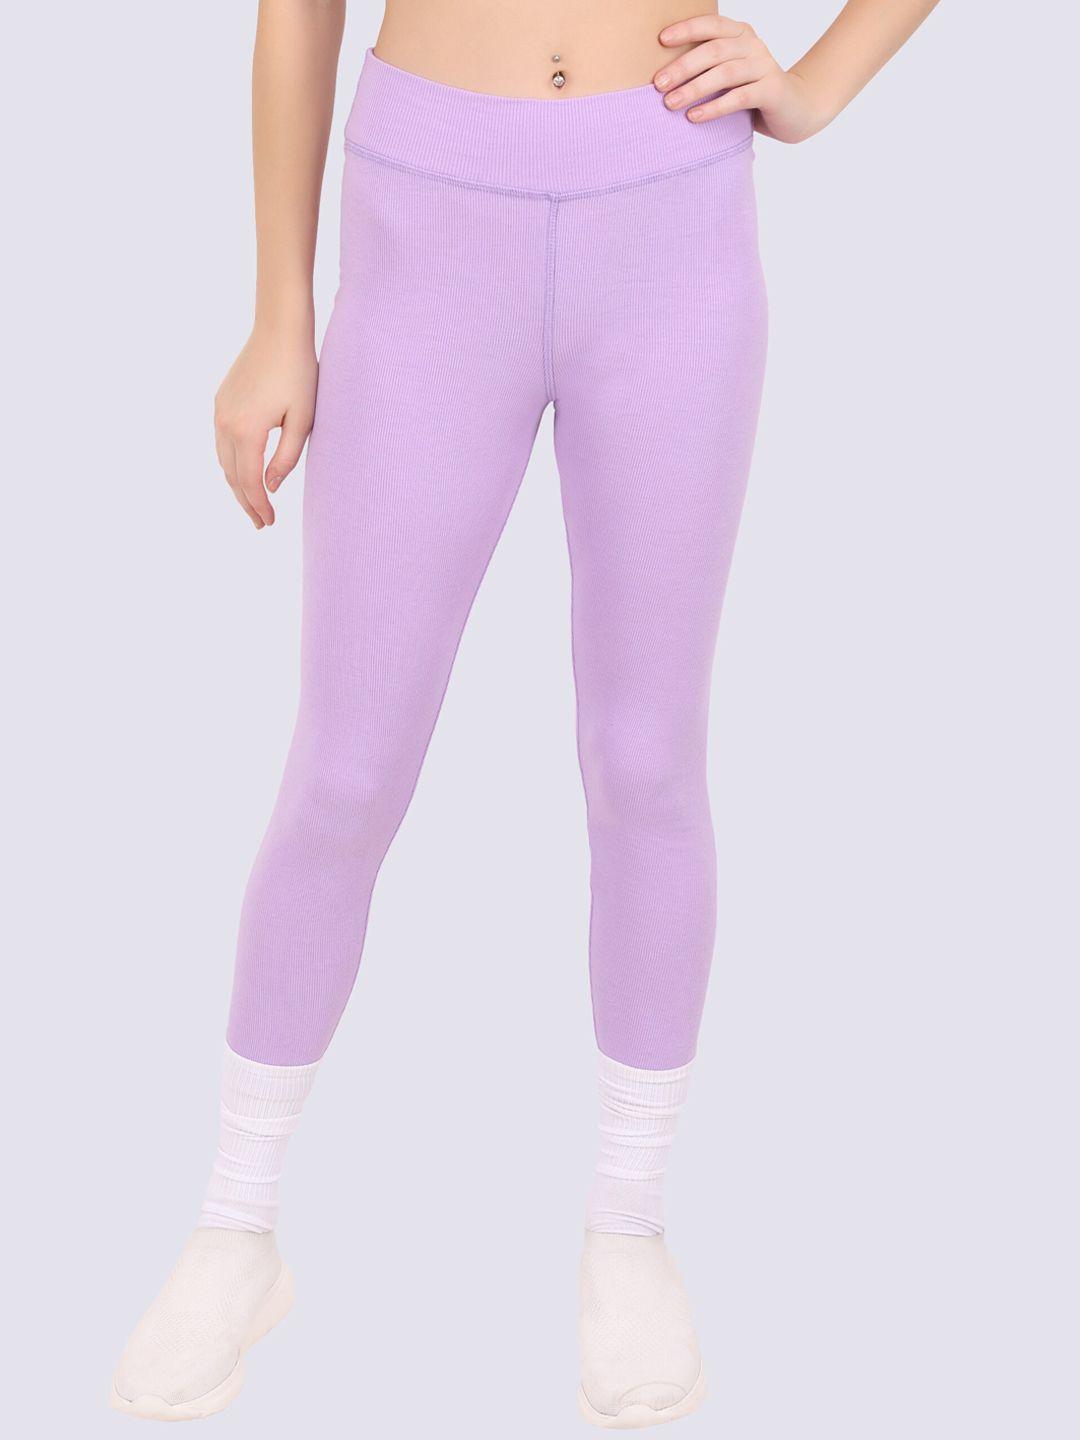 everdion women lavender solid pure cotton tights